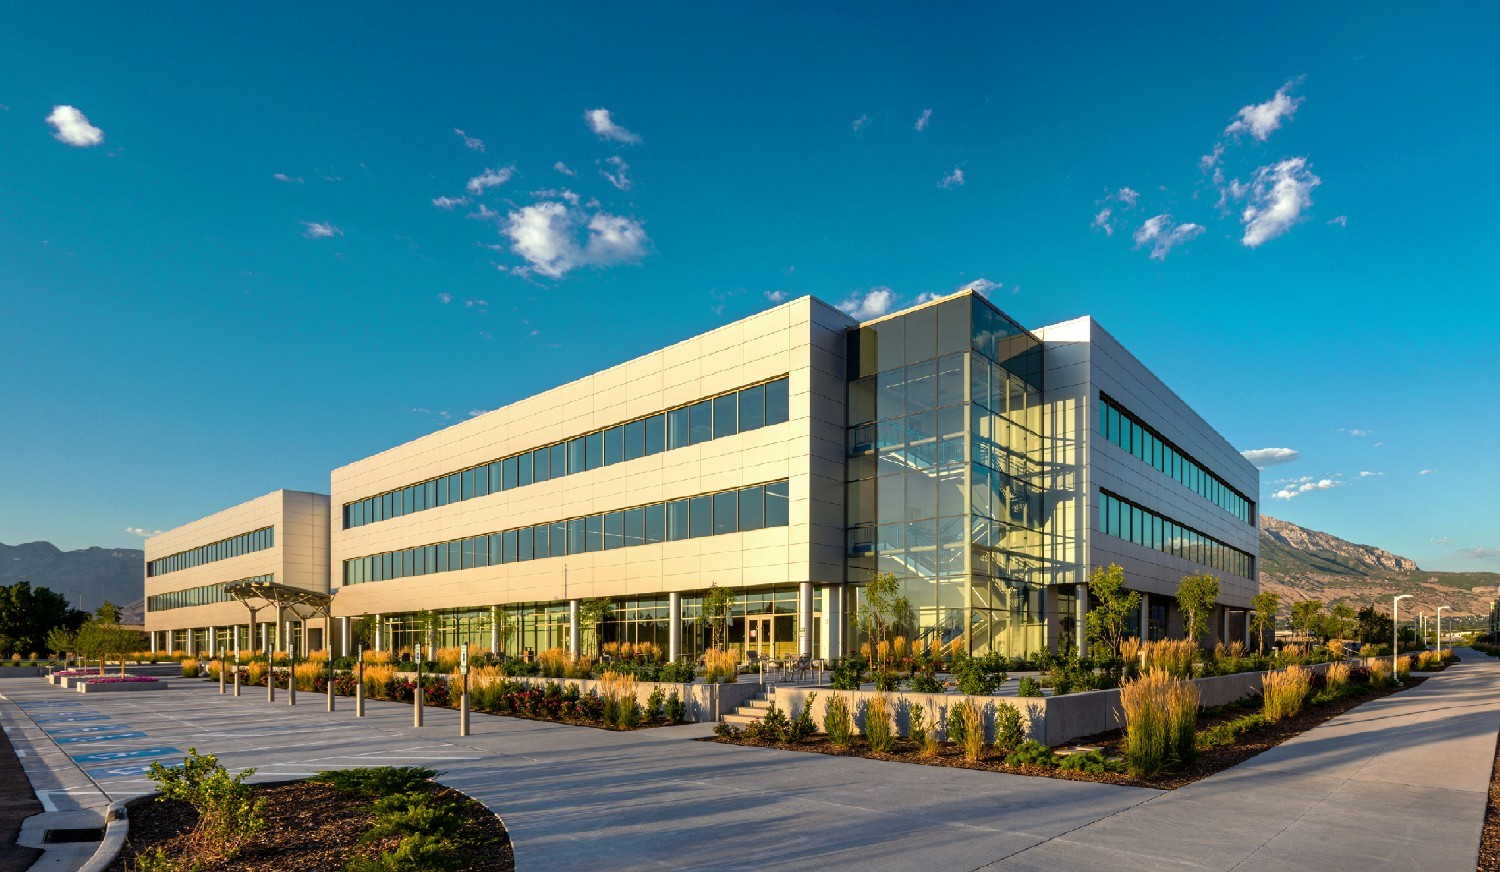 Awardco Headquarters in Lindon, Utah